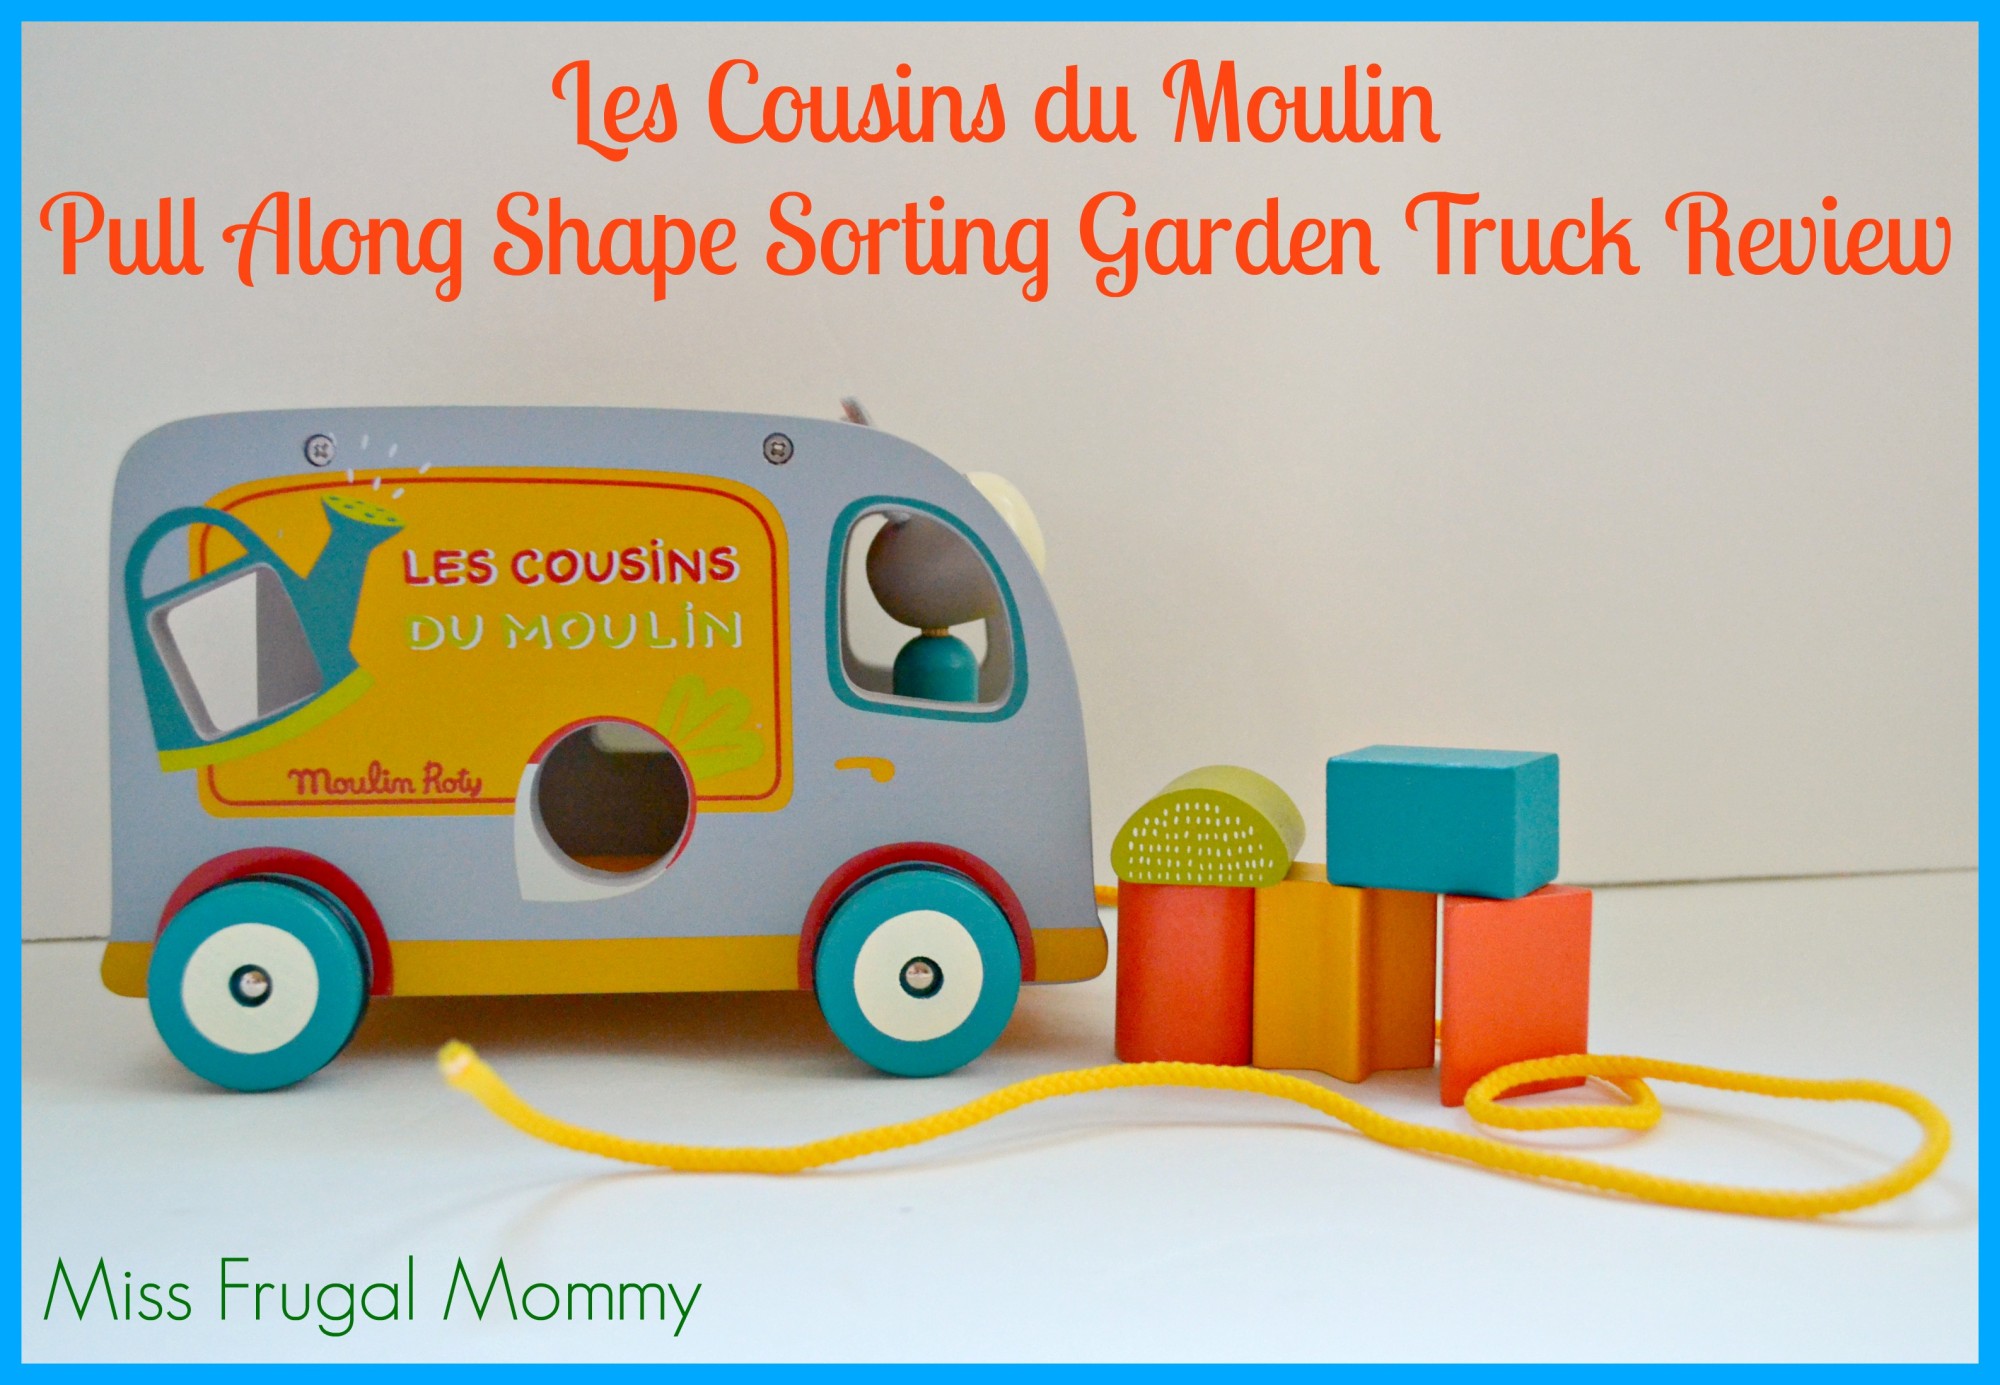 Les Cousins du Moulin: Pull Along Shape Sorting Garden Truck Review